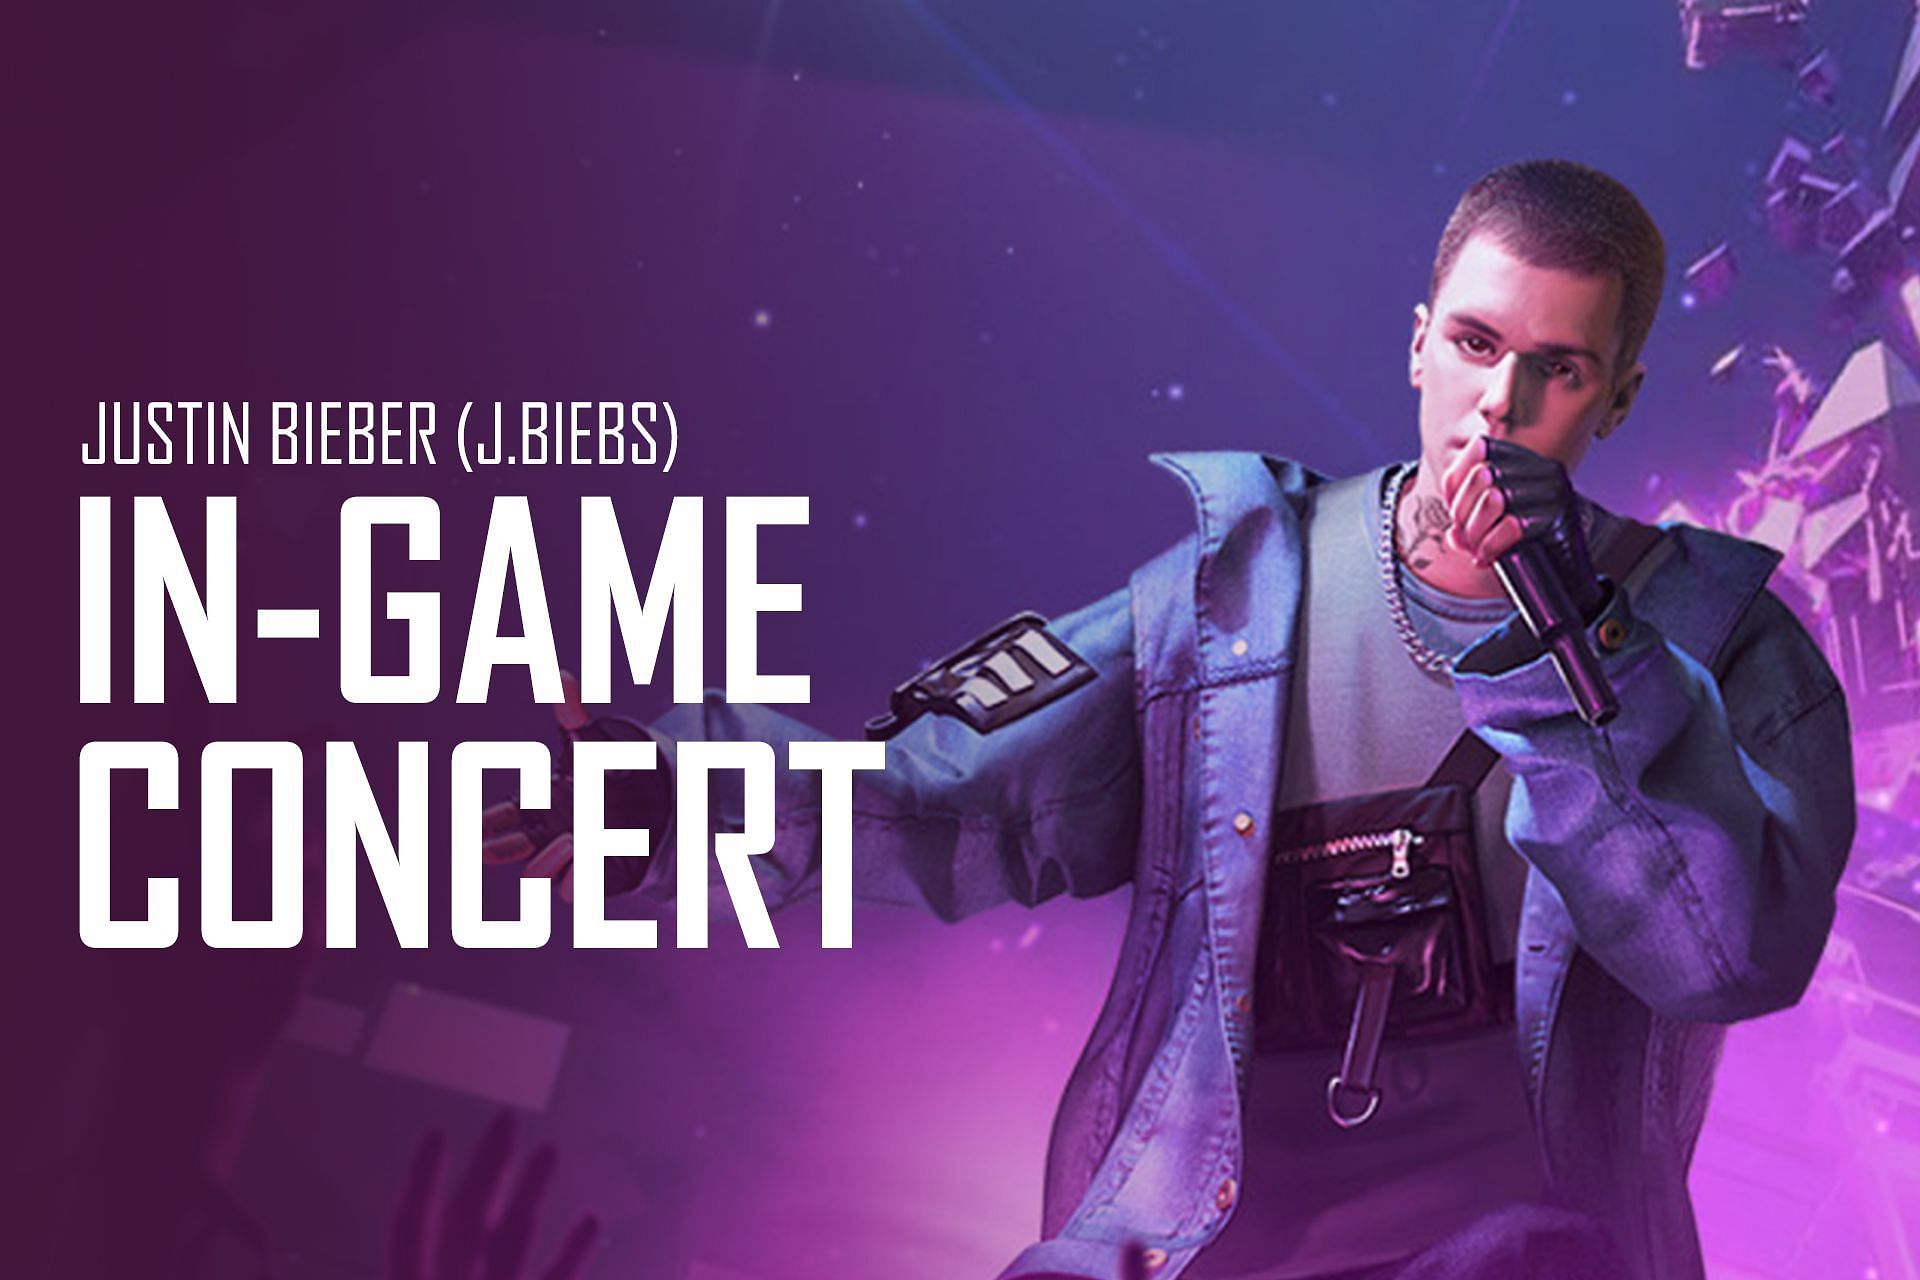 How to watch Justin Bieber (J.Biebs) in-game concert